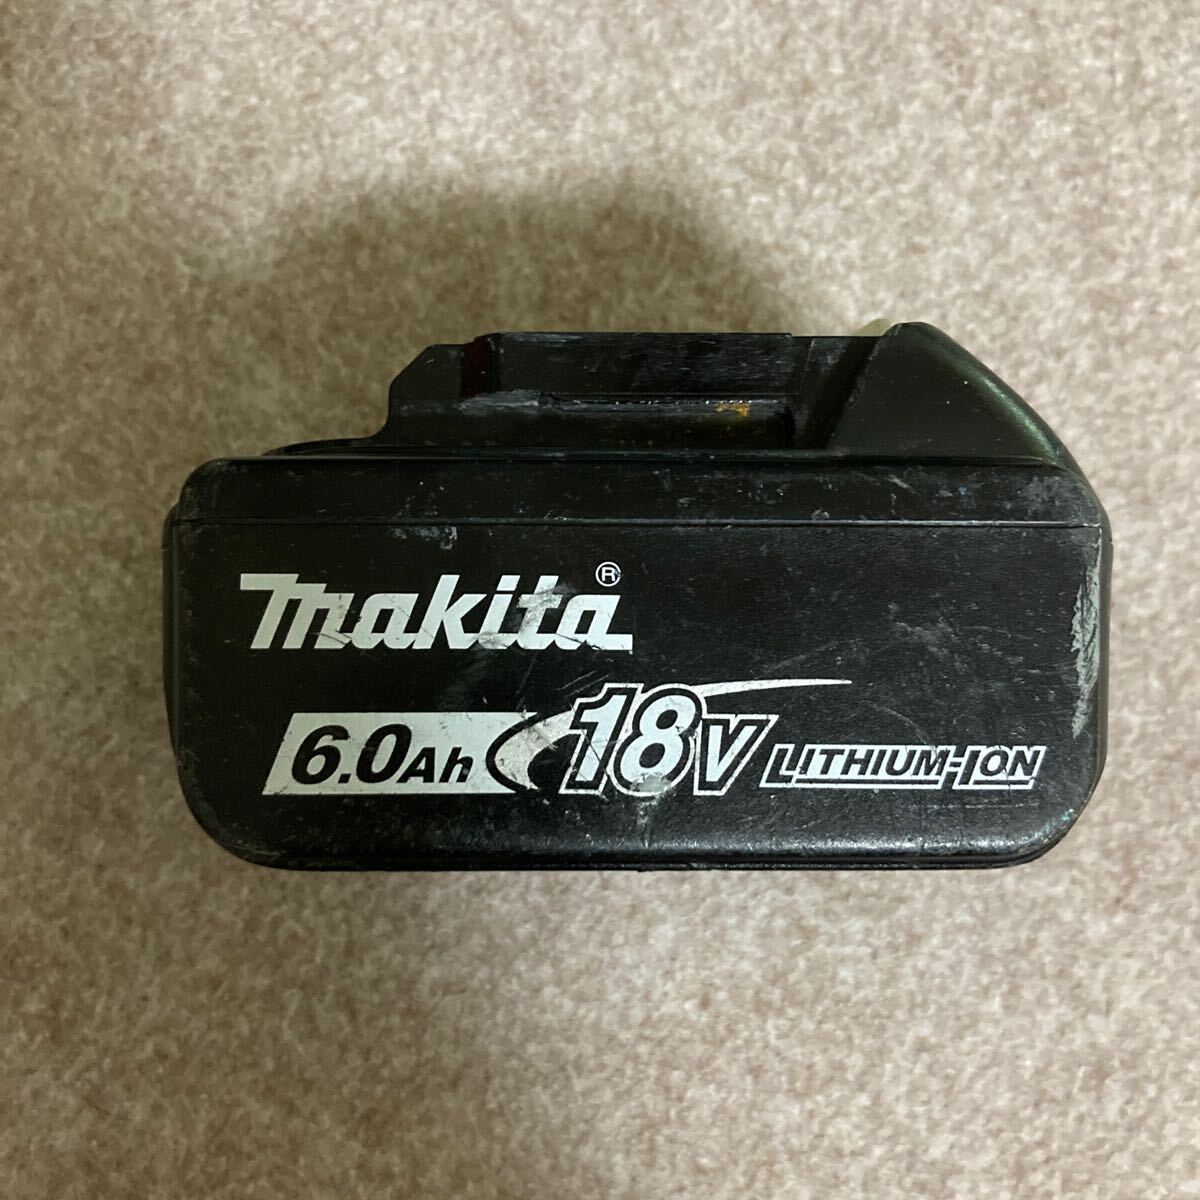  Makita rechargeable battery 6.0 18v lithium ion battery Makita battery Junk 